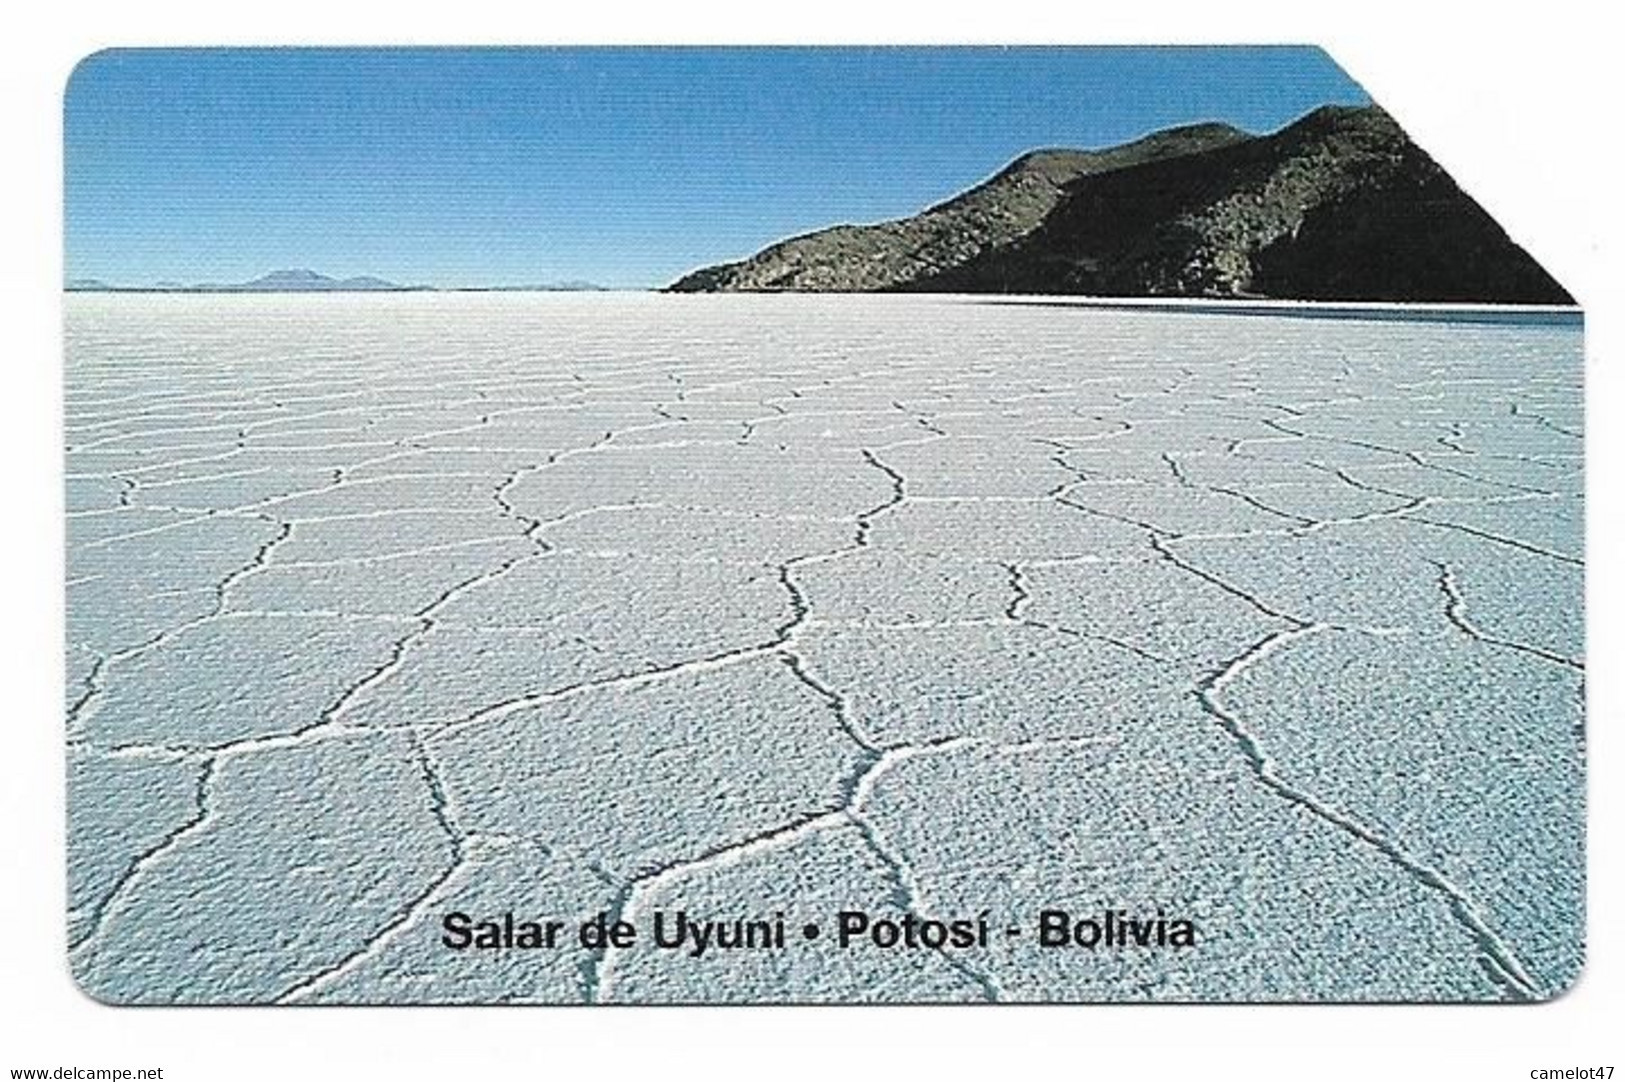 Bolivia, Entel, Urmet Used Phone Card, No Value, Collectors Item, # Bolivia-41 - Bolivia